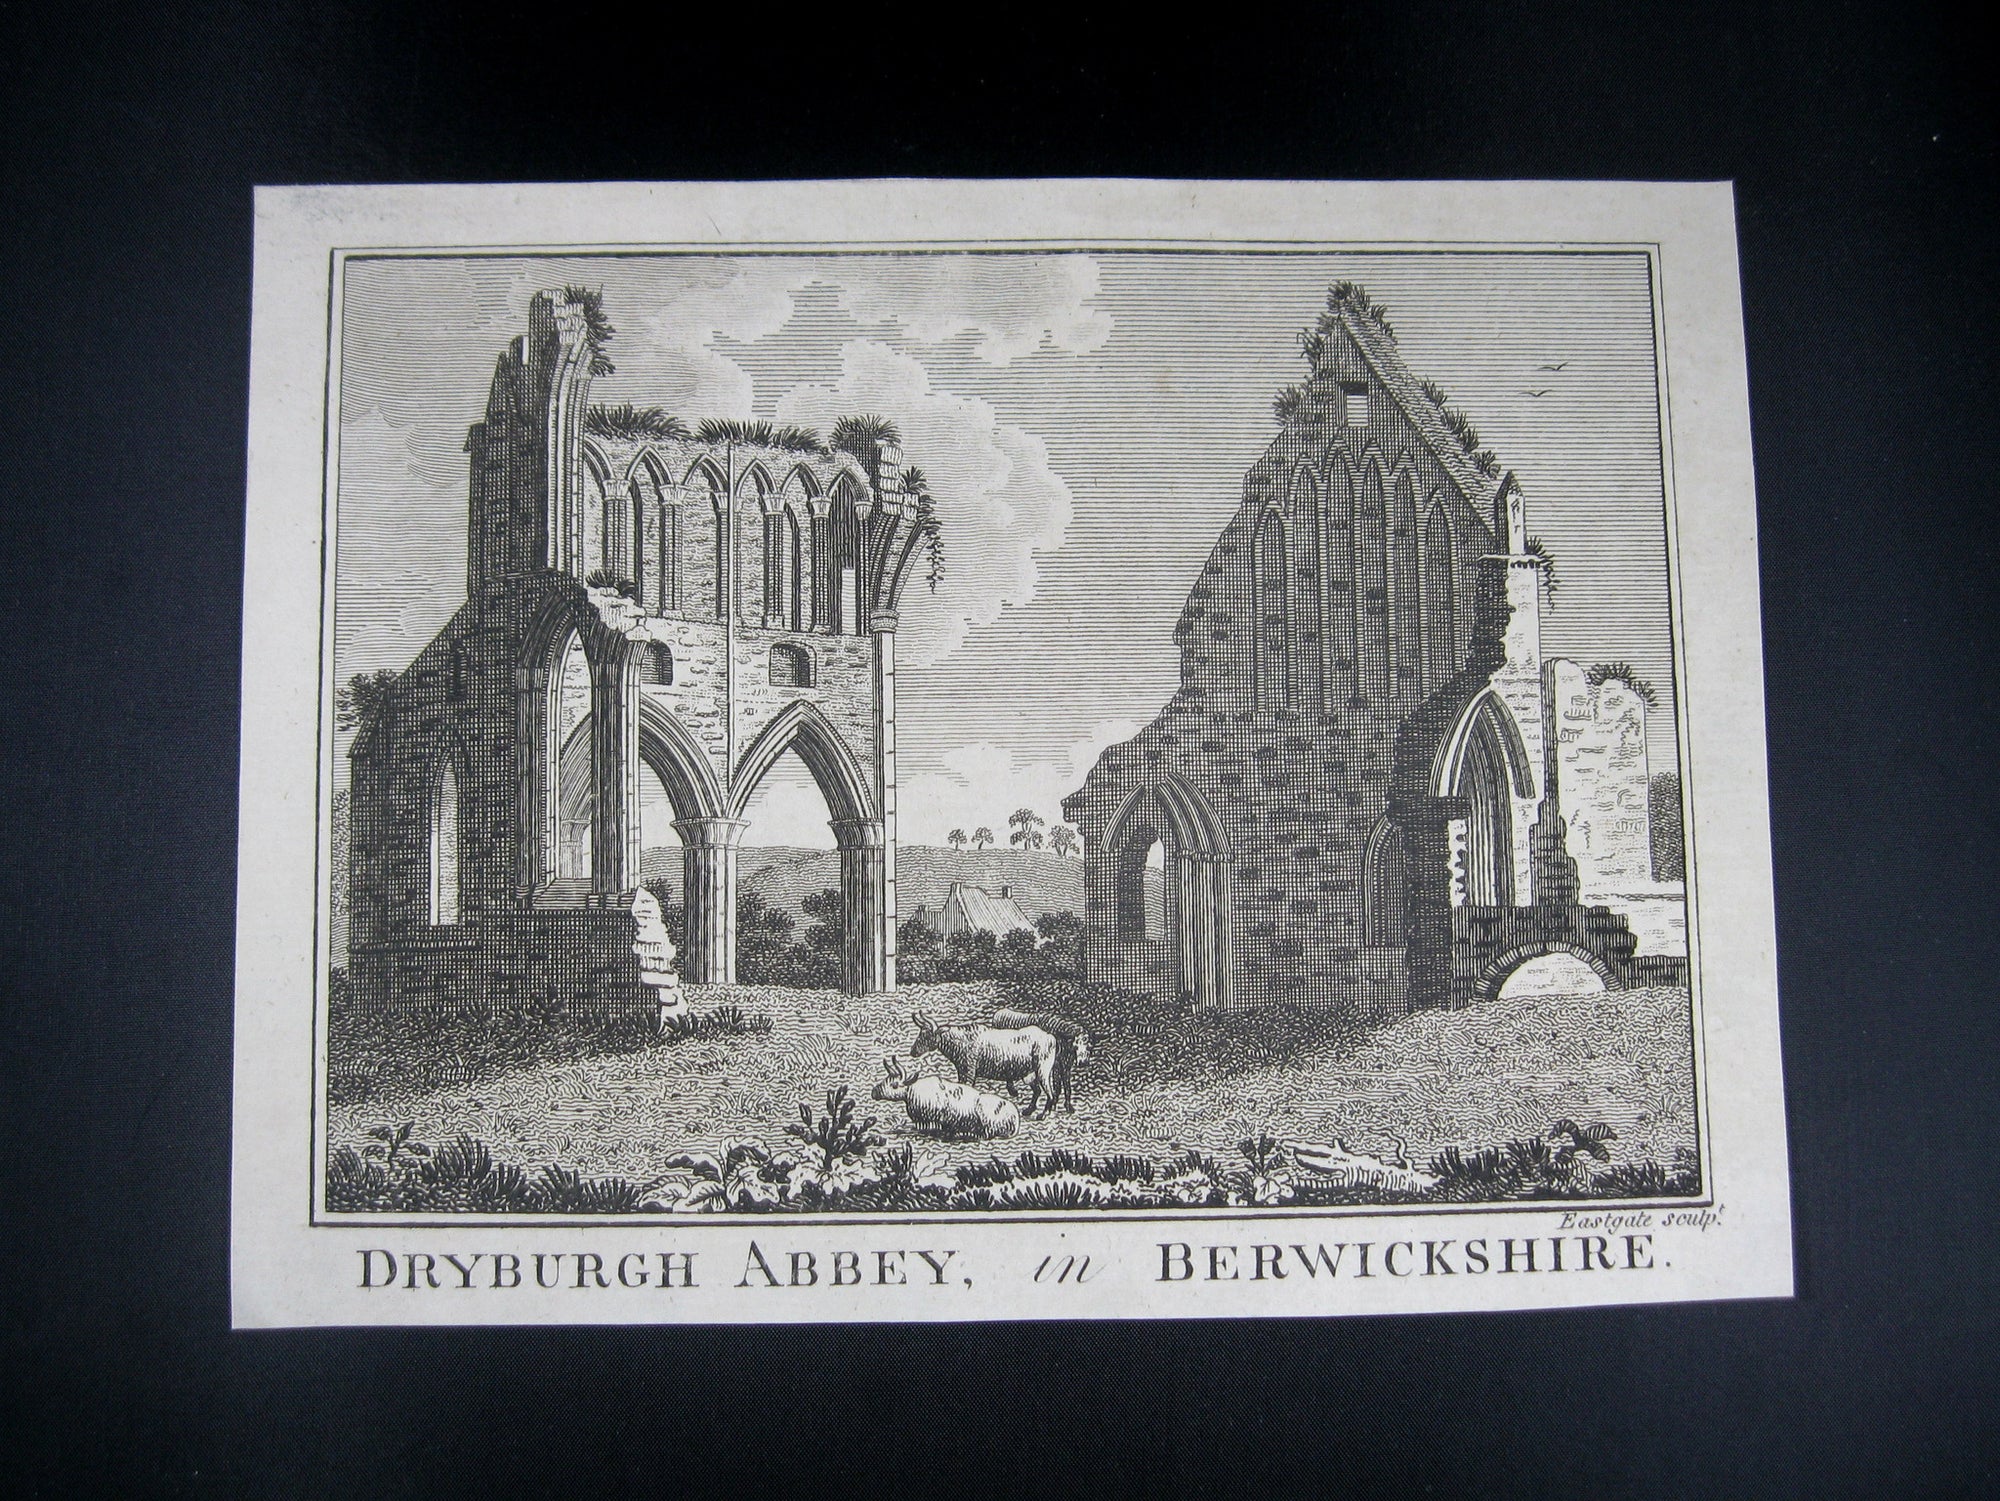 Print 'Dryburgh Abbey, in Berwickshire' @1790